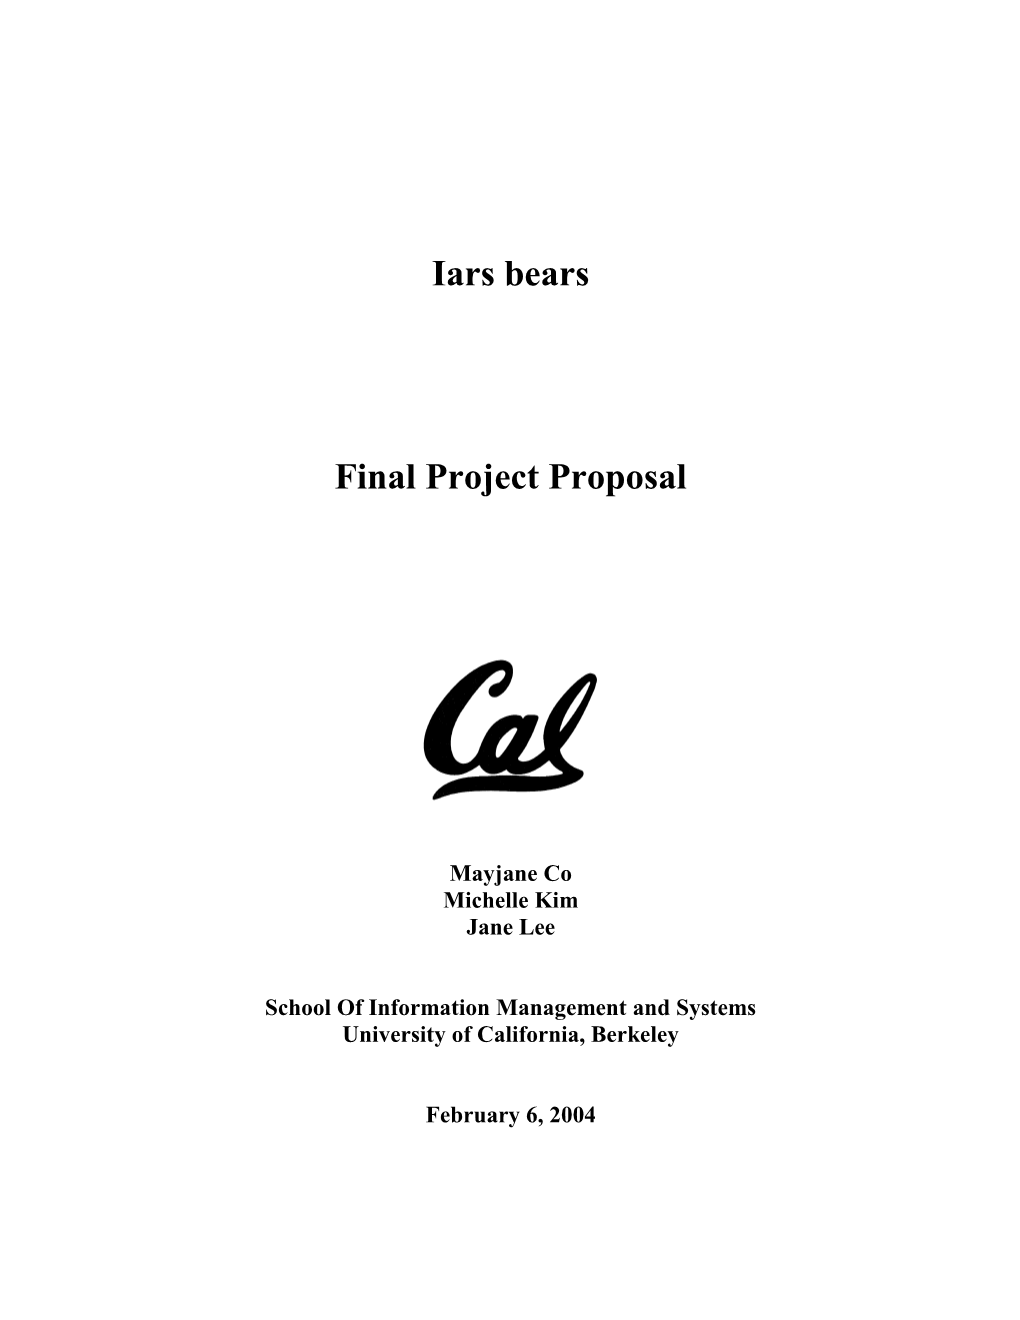 Description of Proposed Project